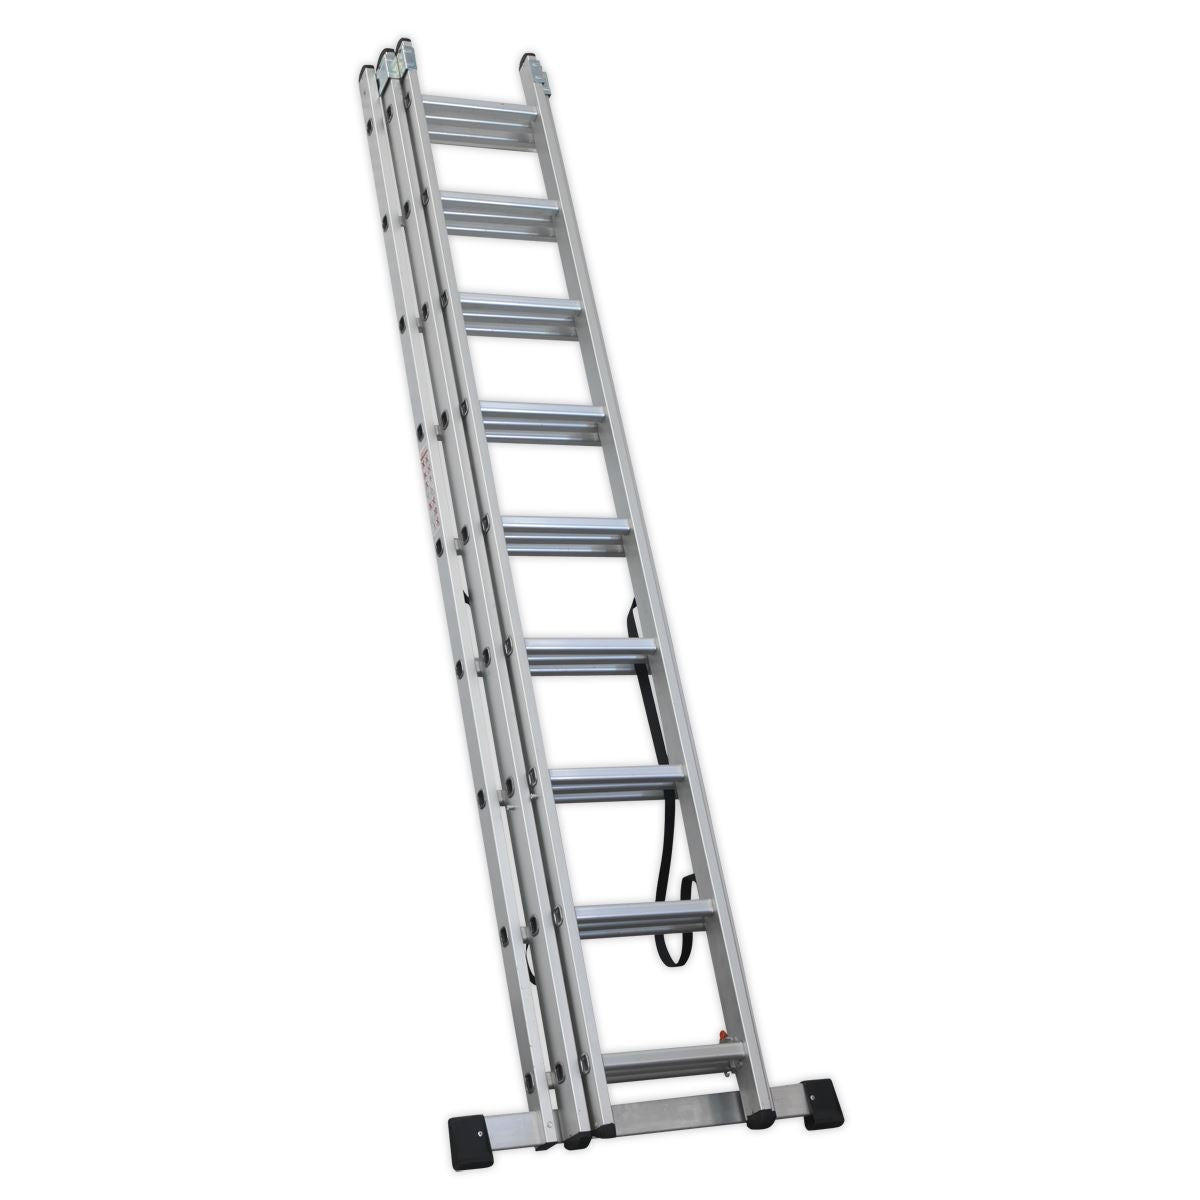 Sealey Aluminium Extension Combination Ladder 3x9 EN 131